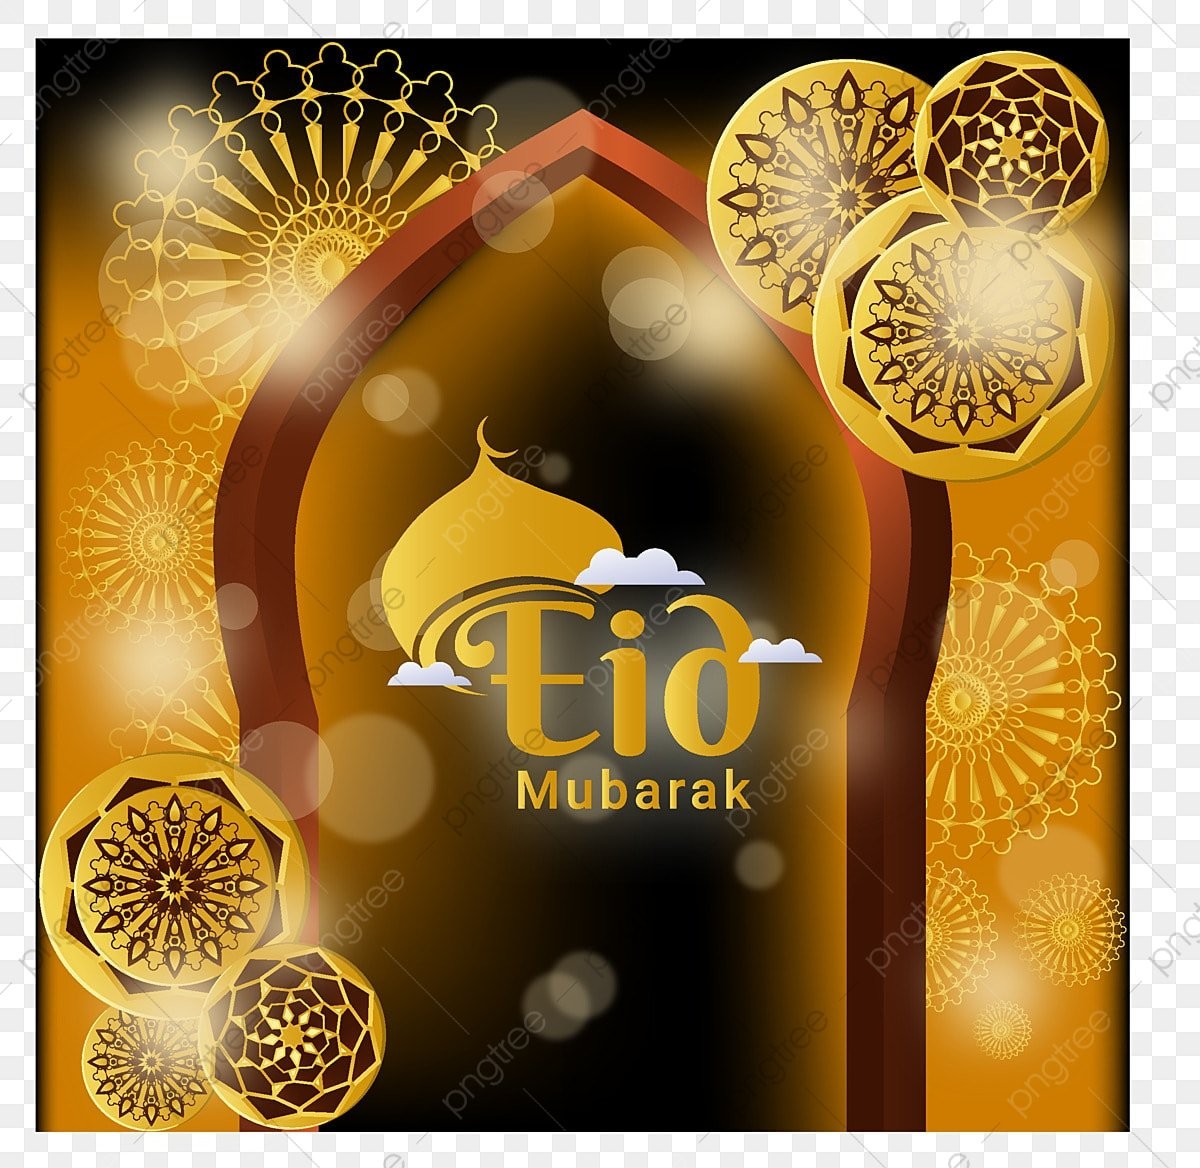 pngtree-gold-eid-mubarak-greeting-card-png-image_7689190.png